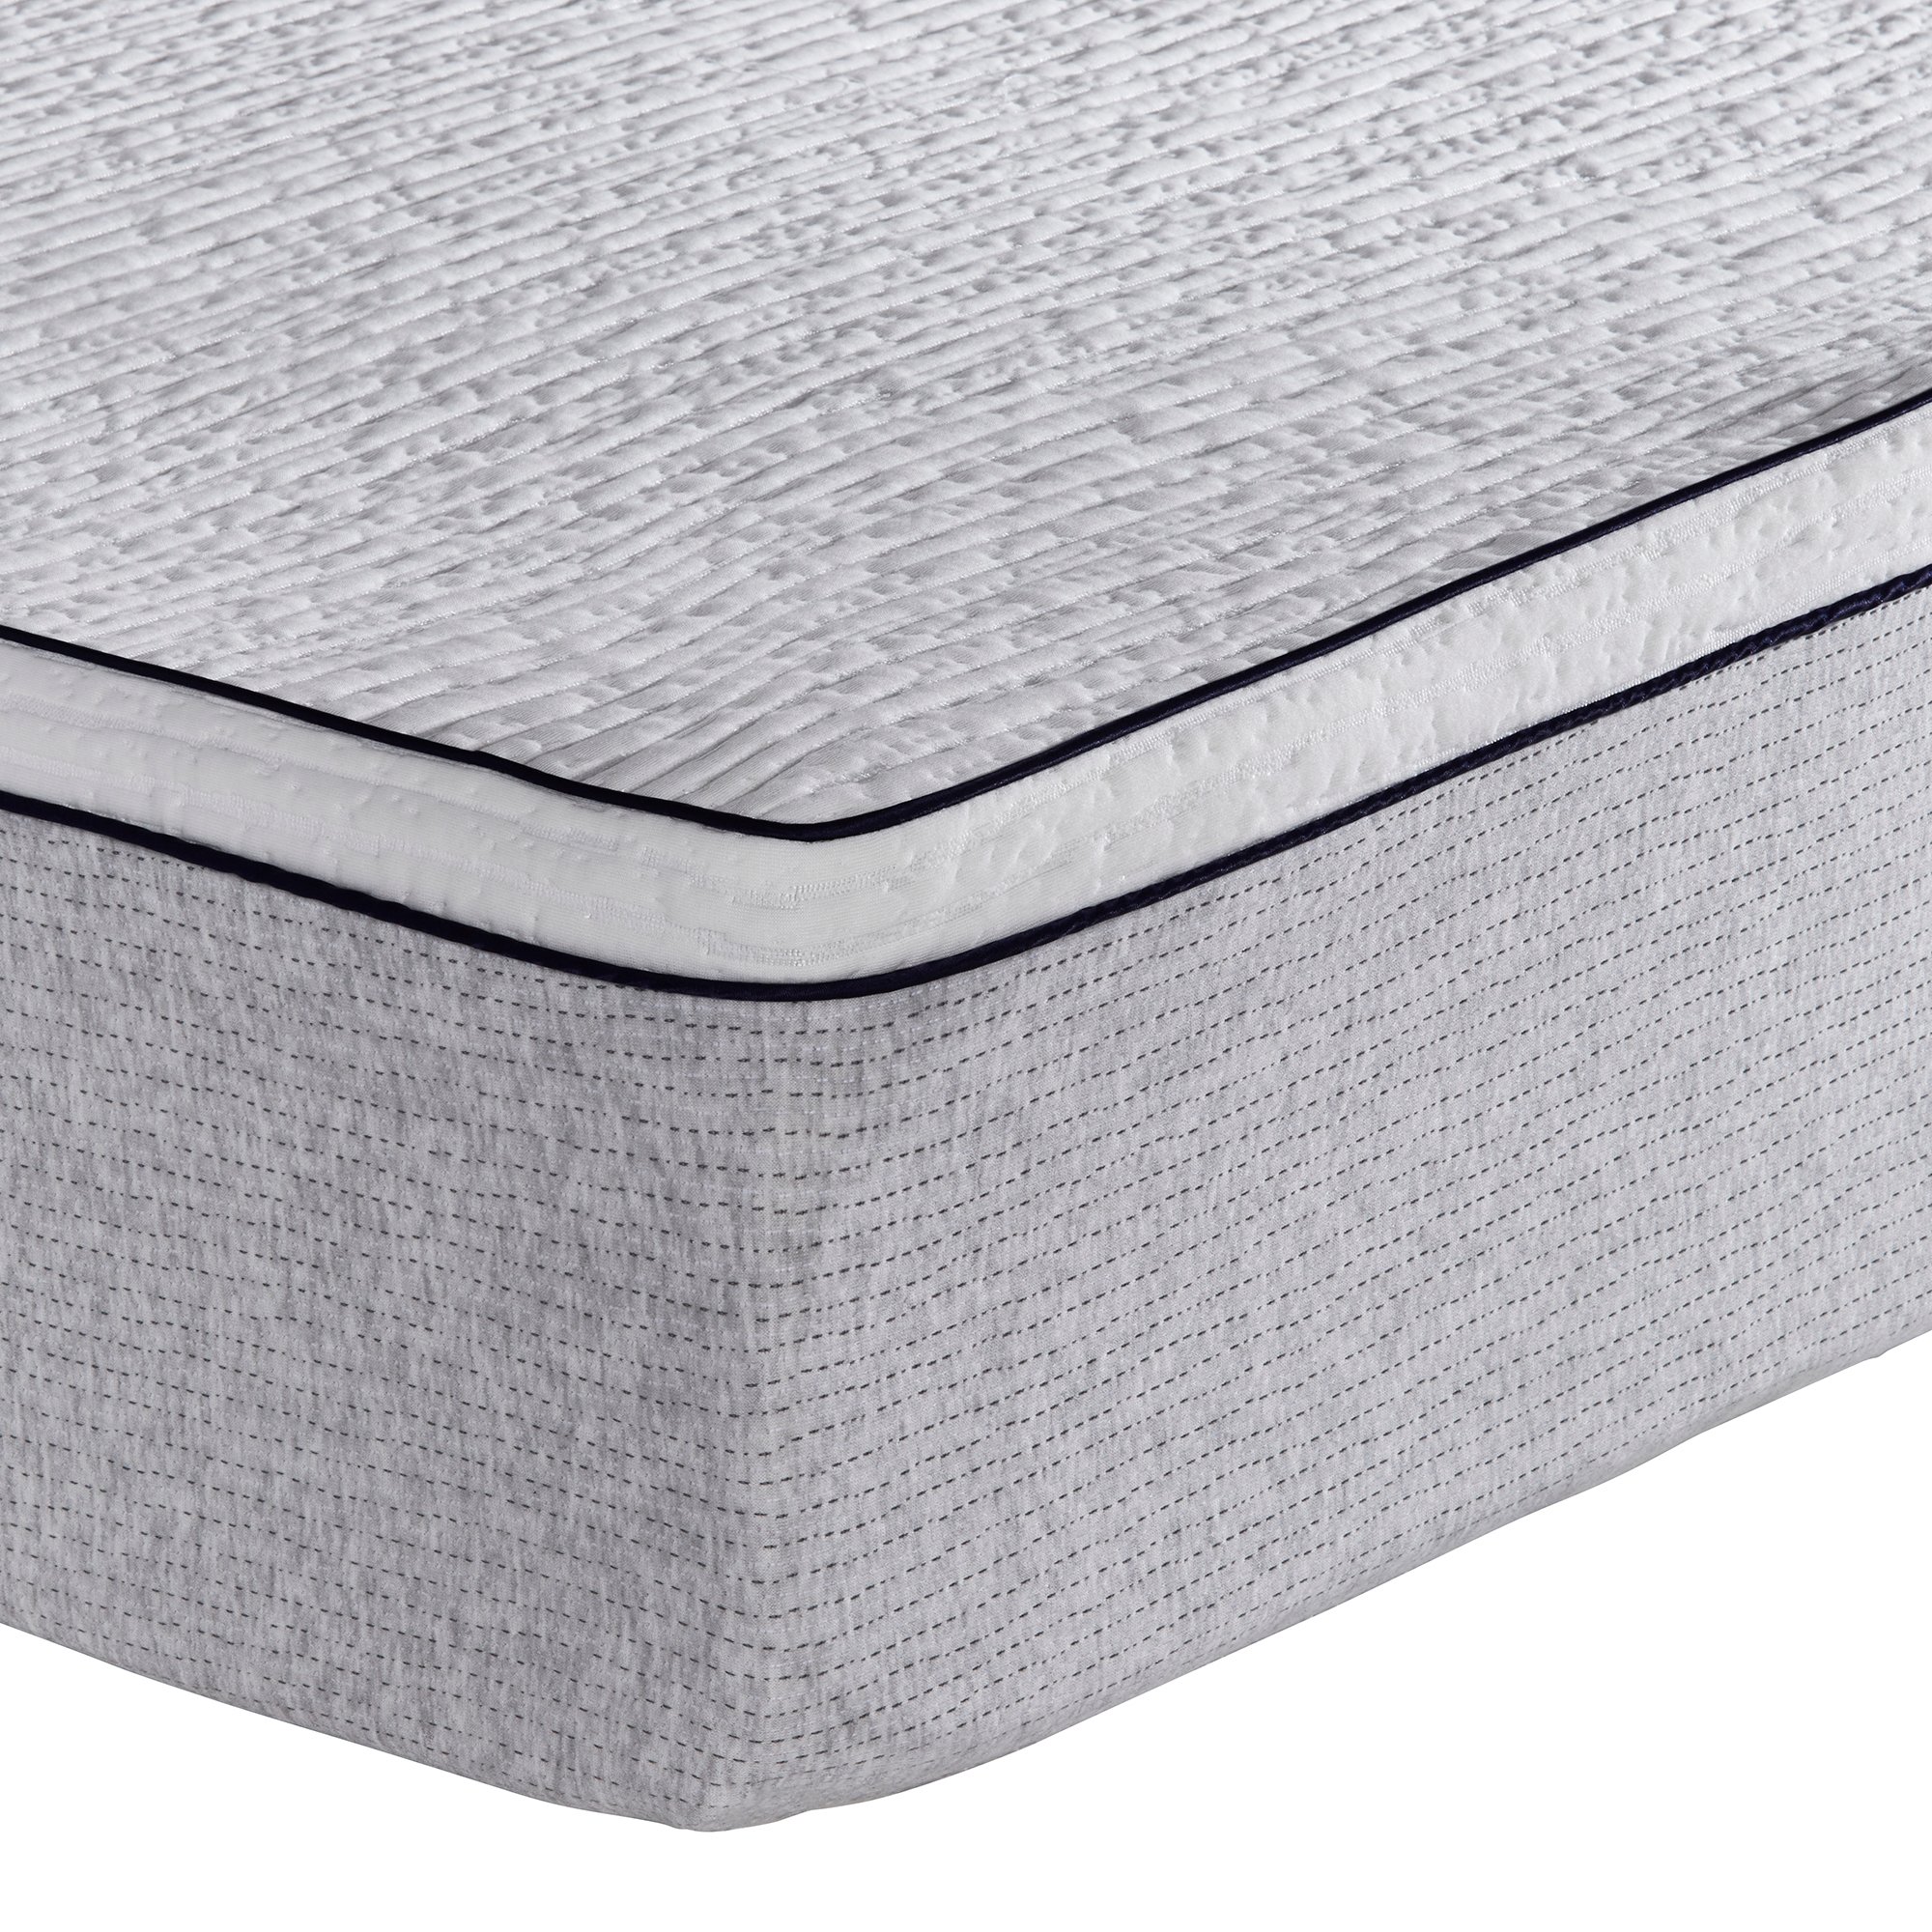 Photo of Flo double size mattress 135x190cm in white